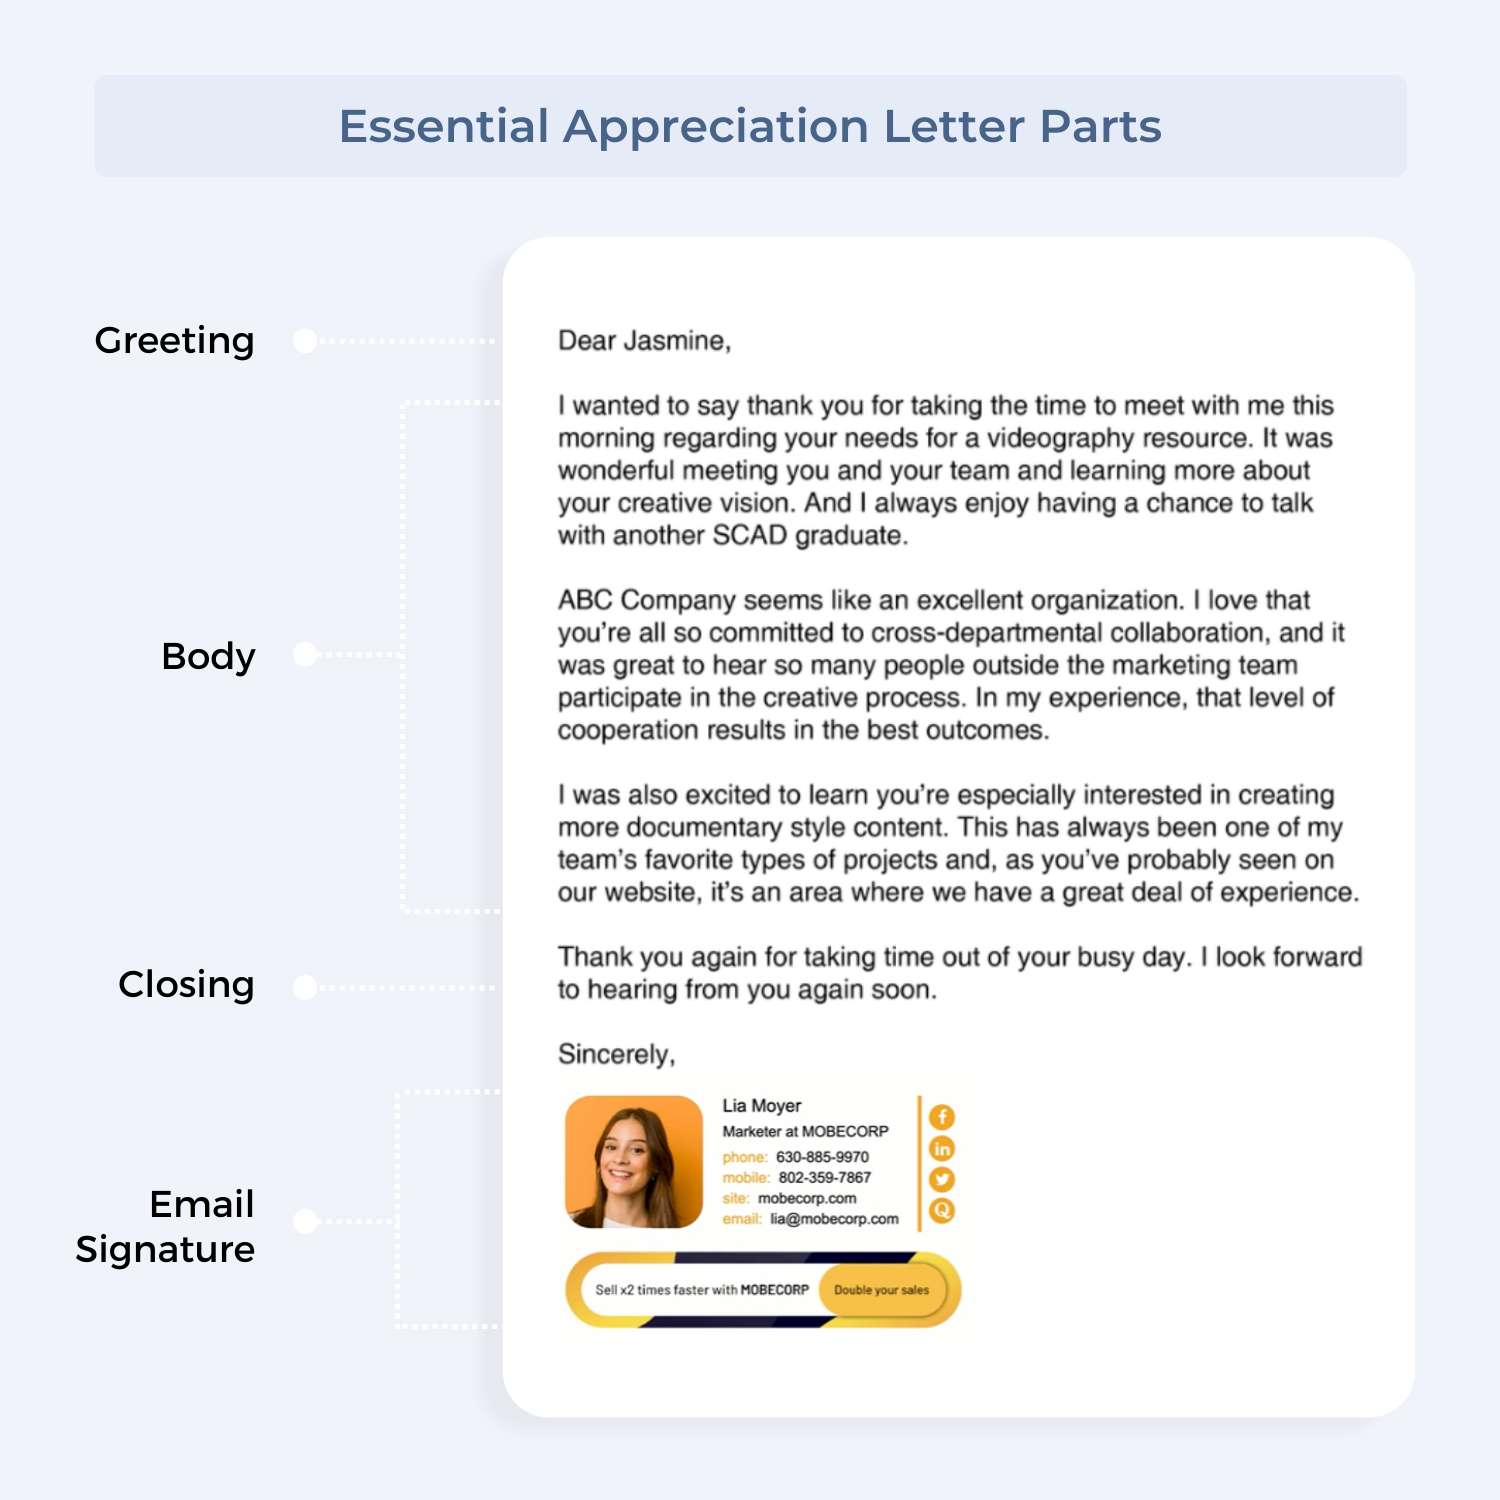 Essential Appreciation Letter Parts